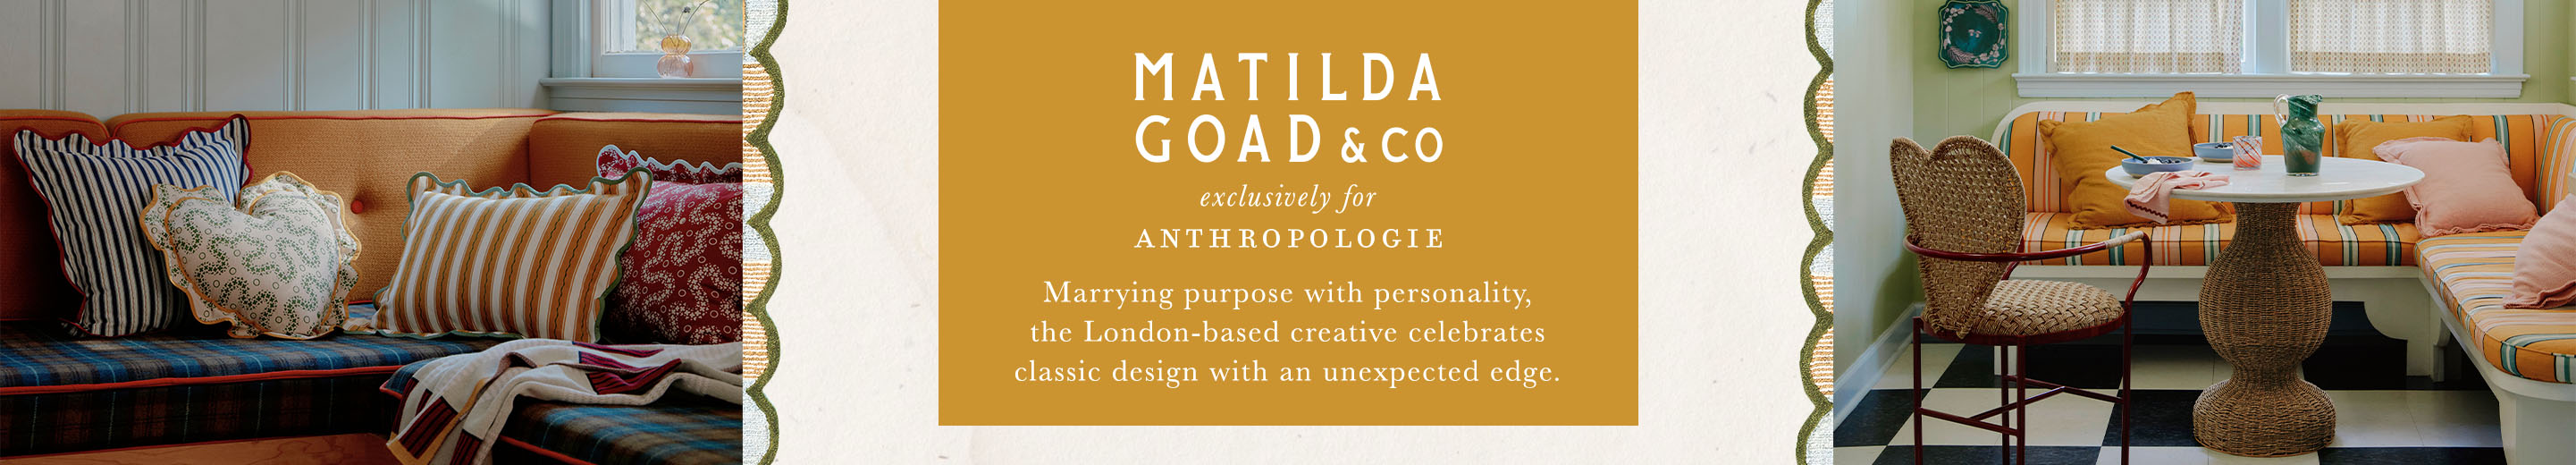 Matilda Goad & Co. | Anthropologie UK